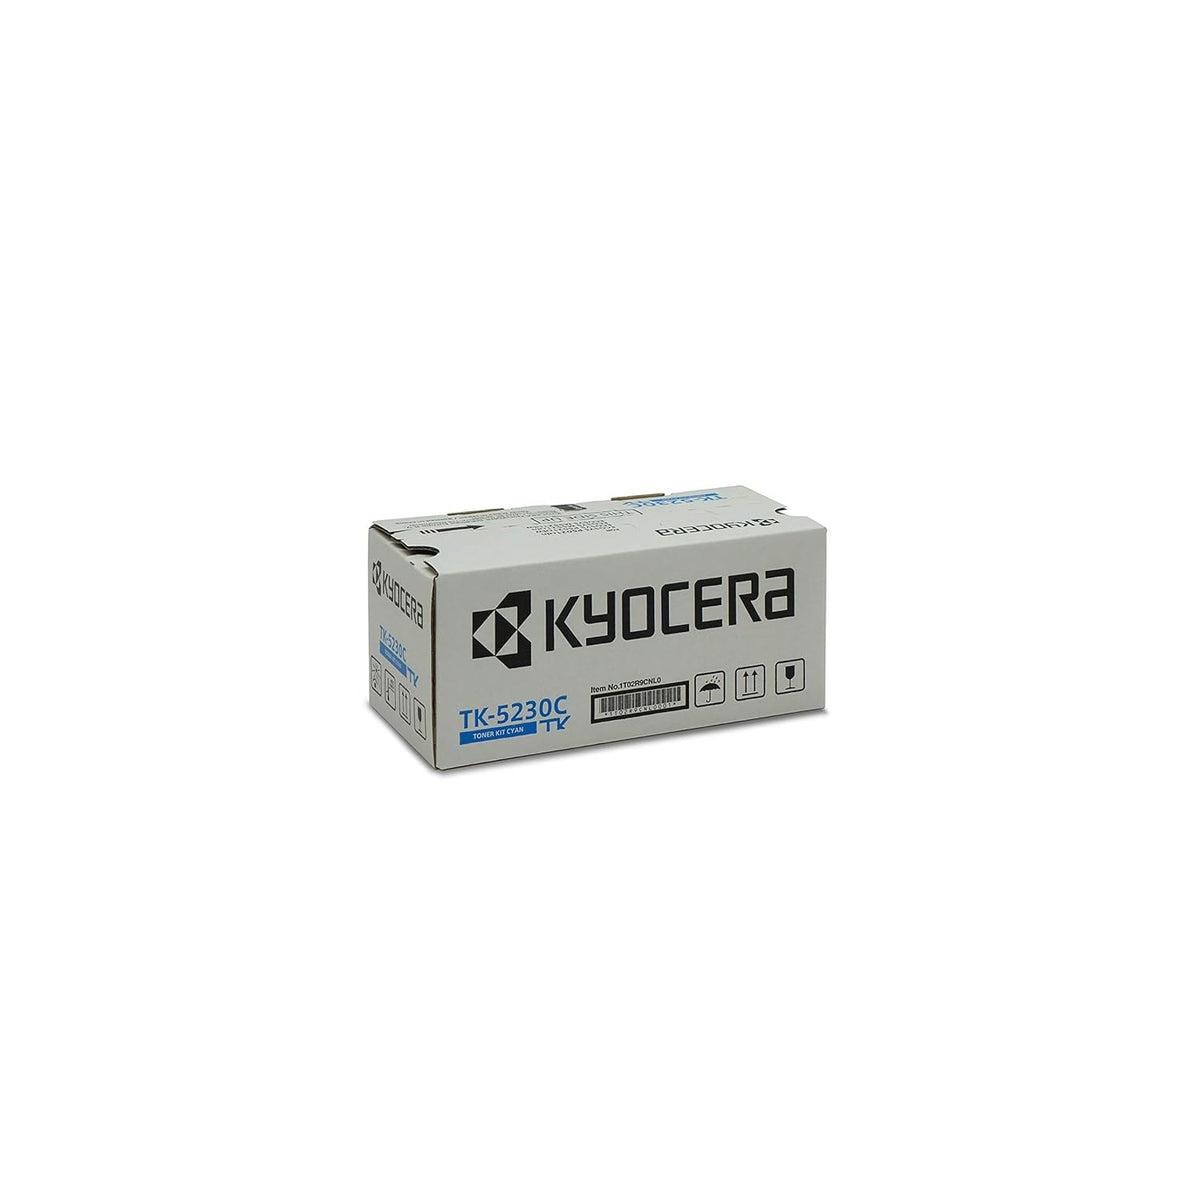 Kyocera TK-5230C High Capacity Cyan Toner Cartridge